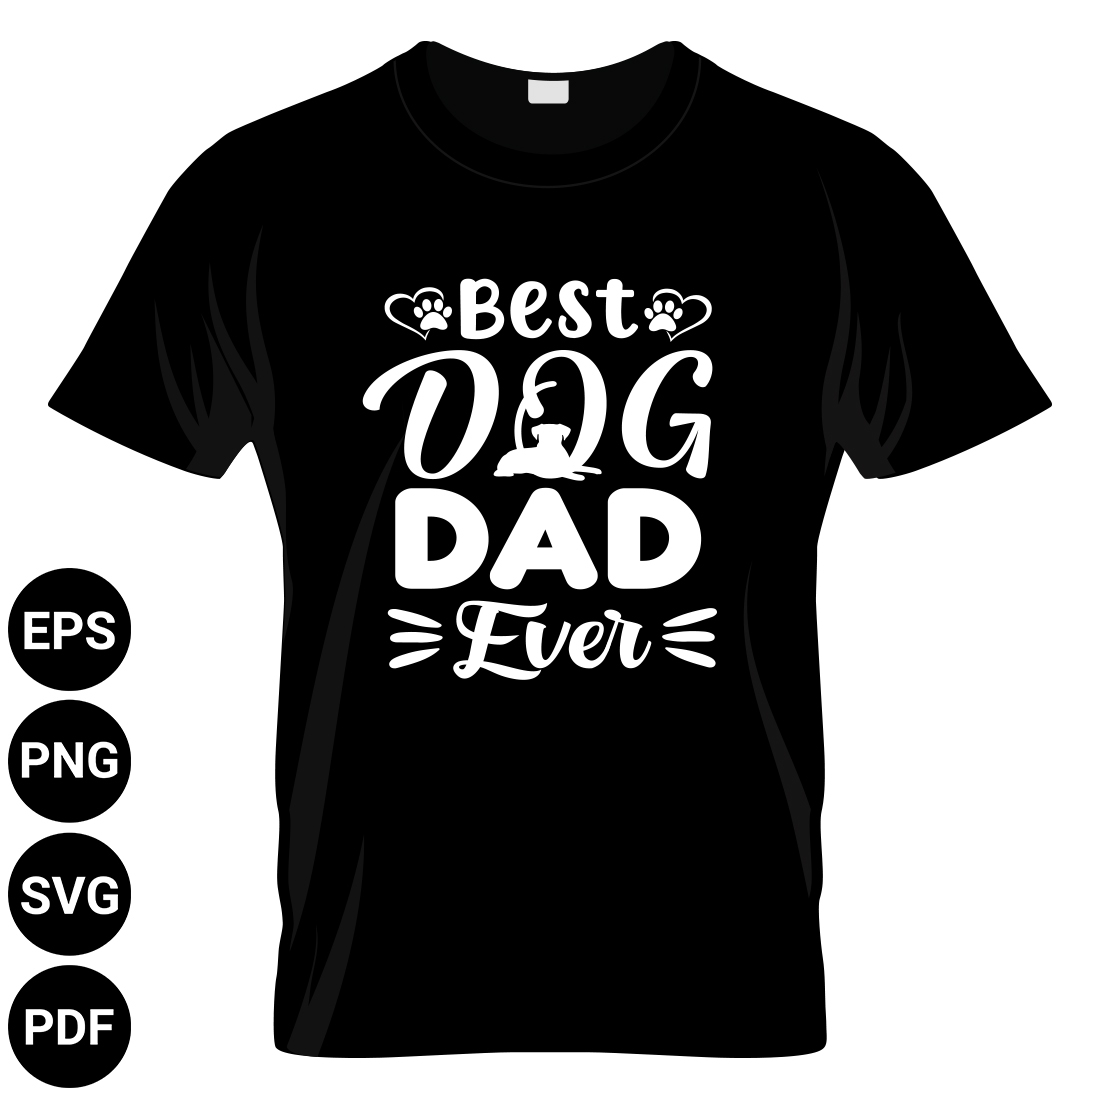 Best Dog Dad Ever T-shirt design cover image.